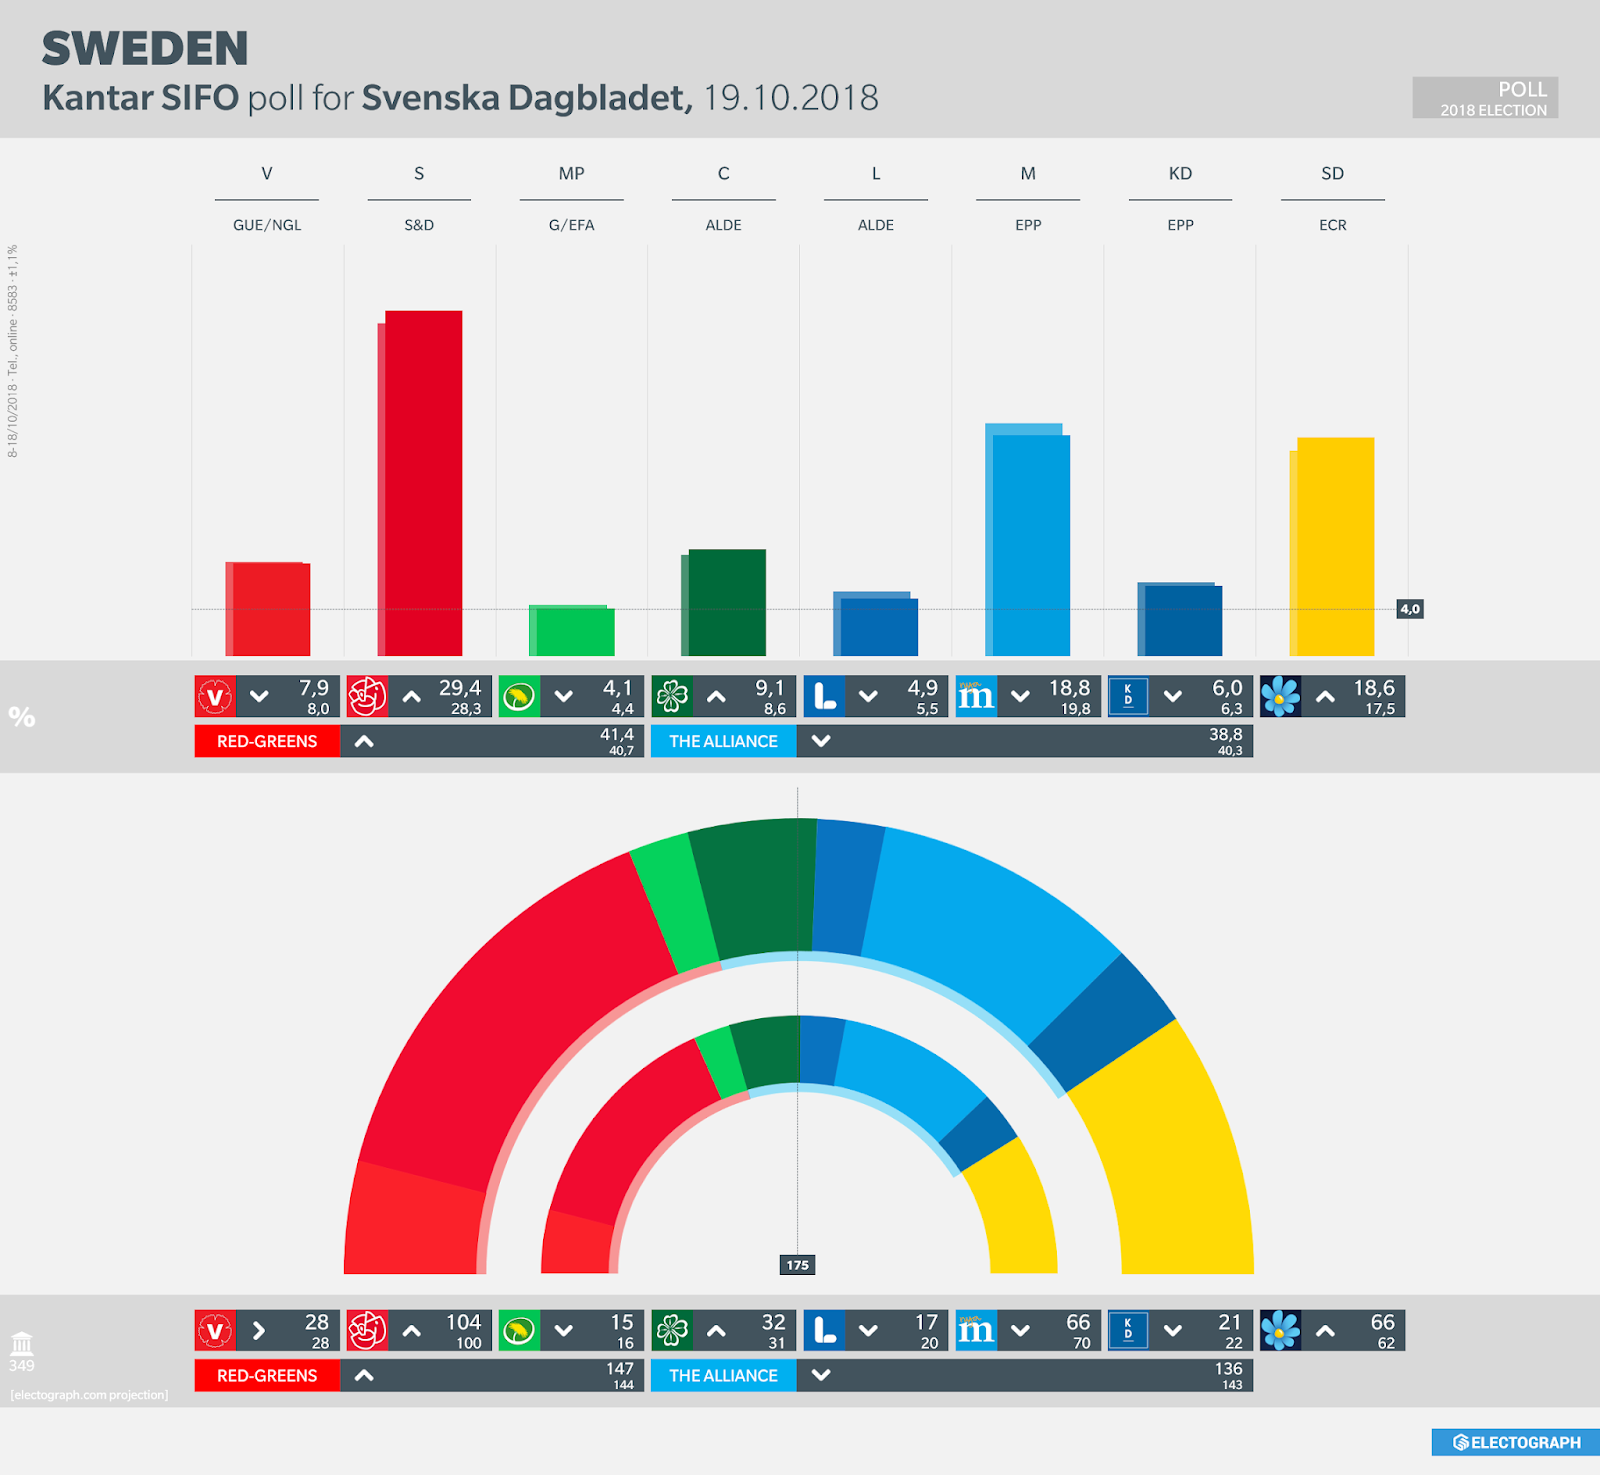 SWEDEN: Kantar SIFO poll chart for Svenska Dagbladet, October 2018